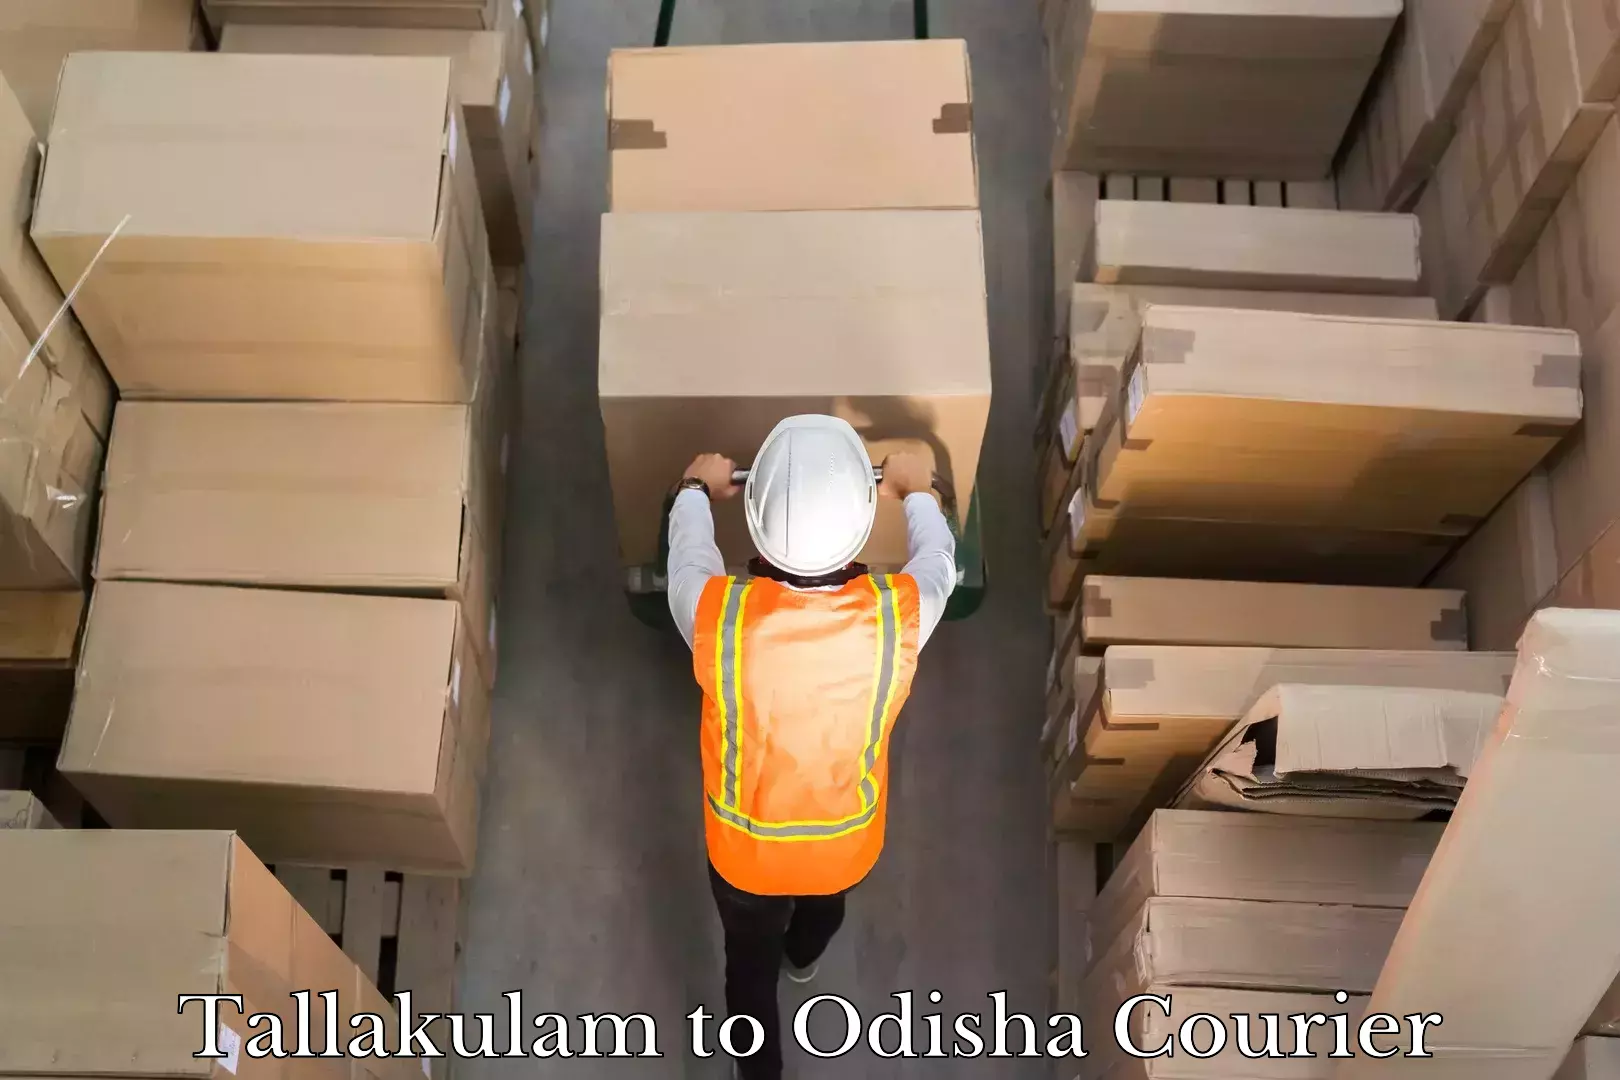 Nationwide delivery network Tallakulam to Odisha